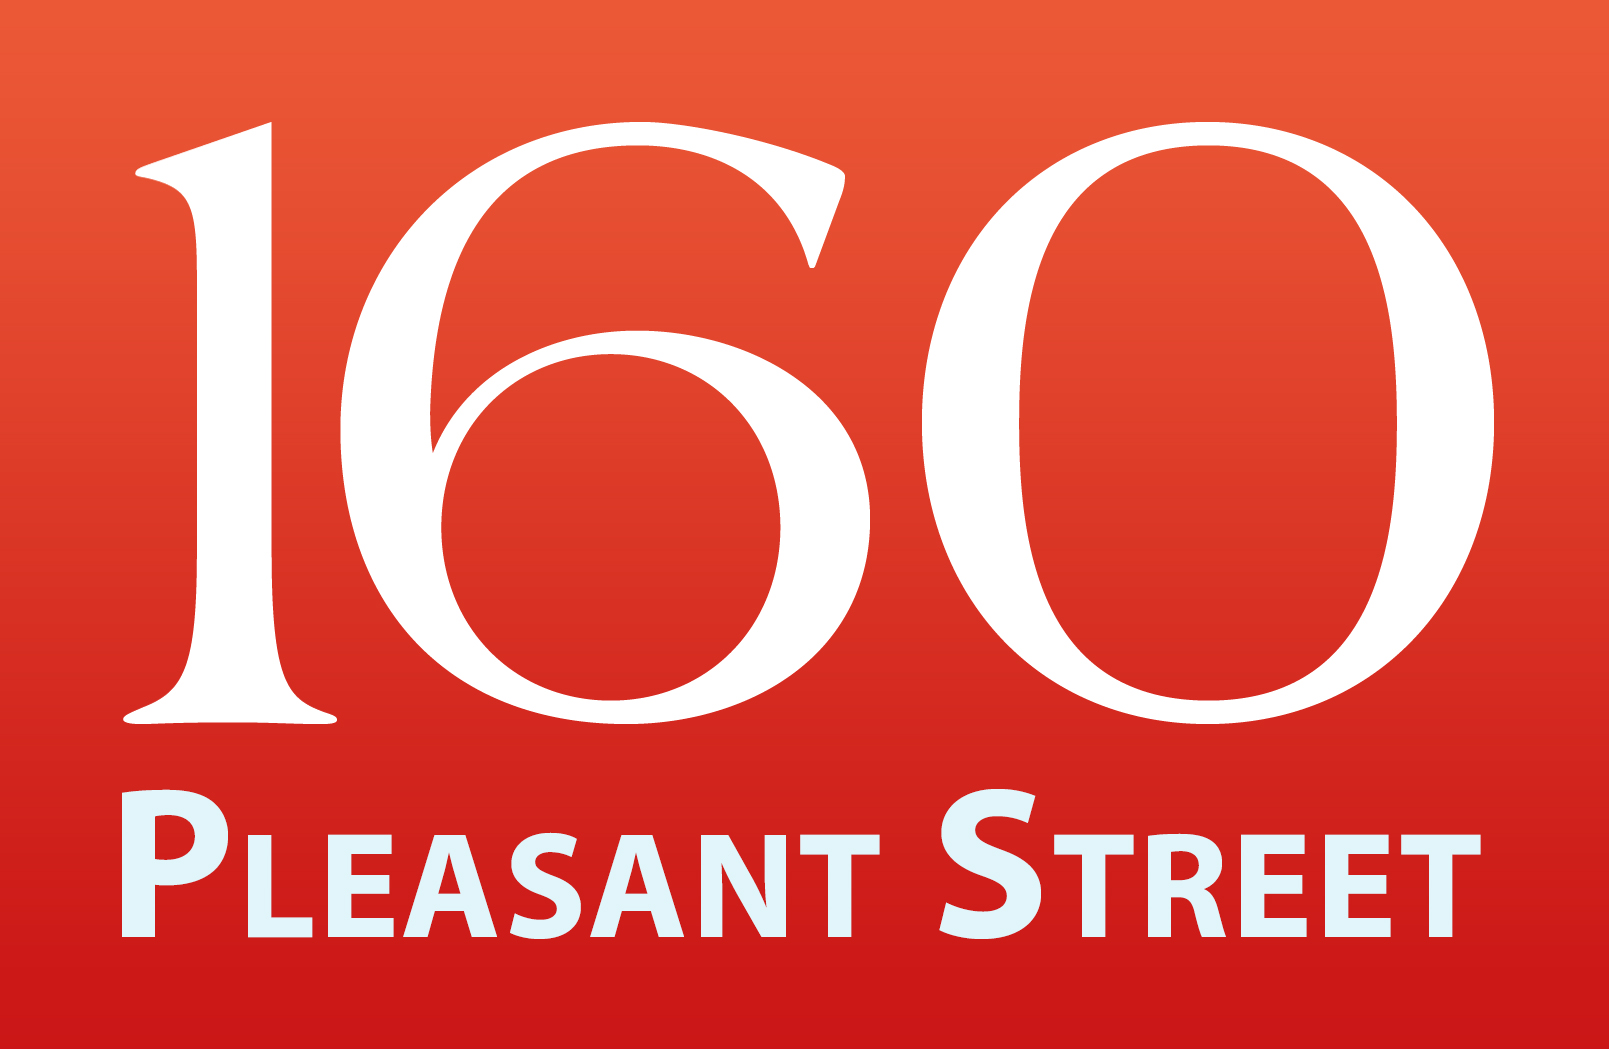 160 Pleasant St. Apartments Logo